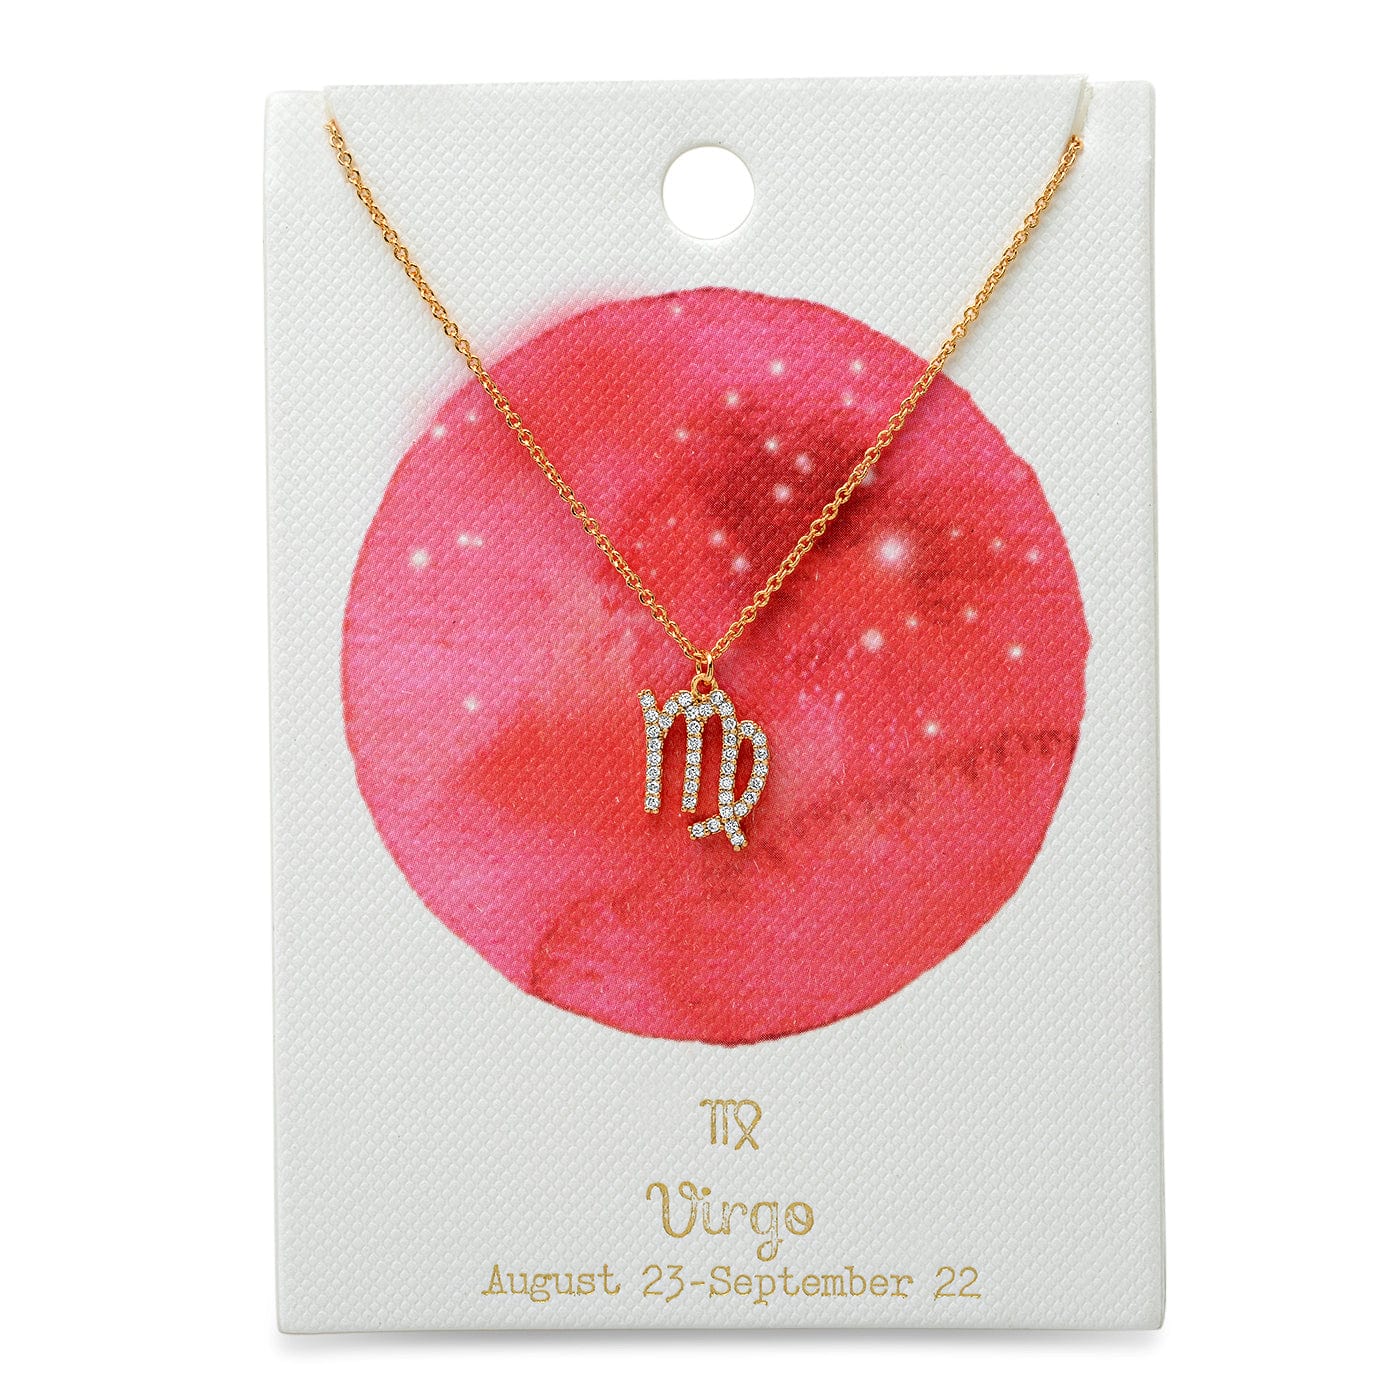 TAI JEWELRY Necklace Virgo Pave CZ Zodiac Symbol Pendant Necklace